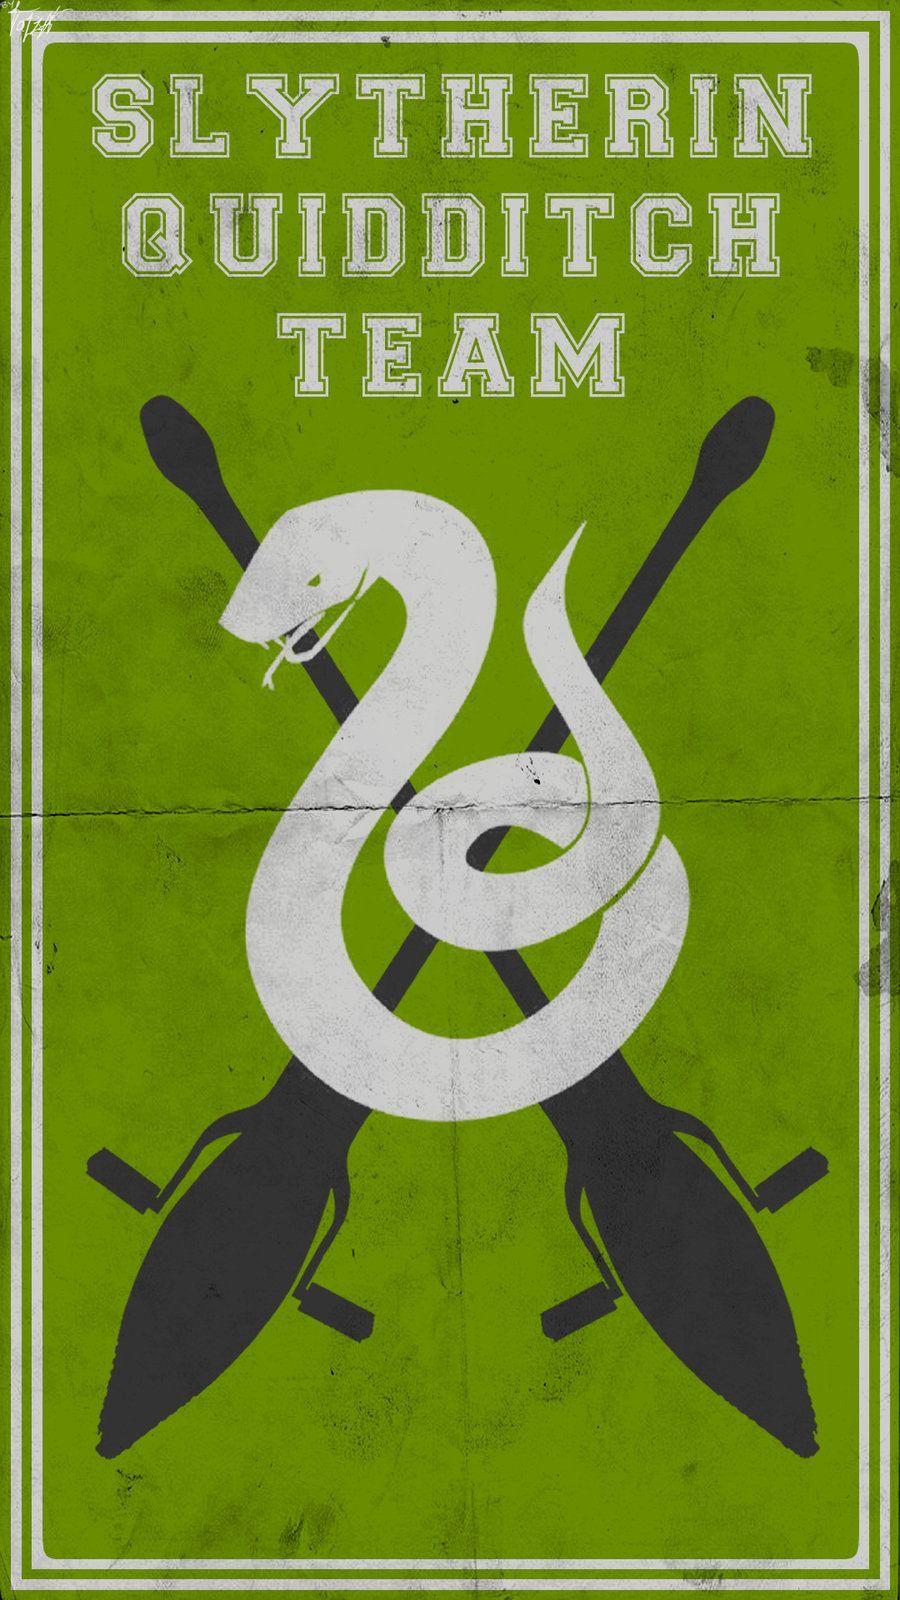 Quidditch Team Poster: Slytherin